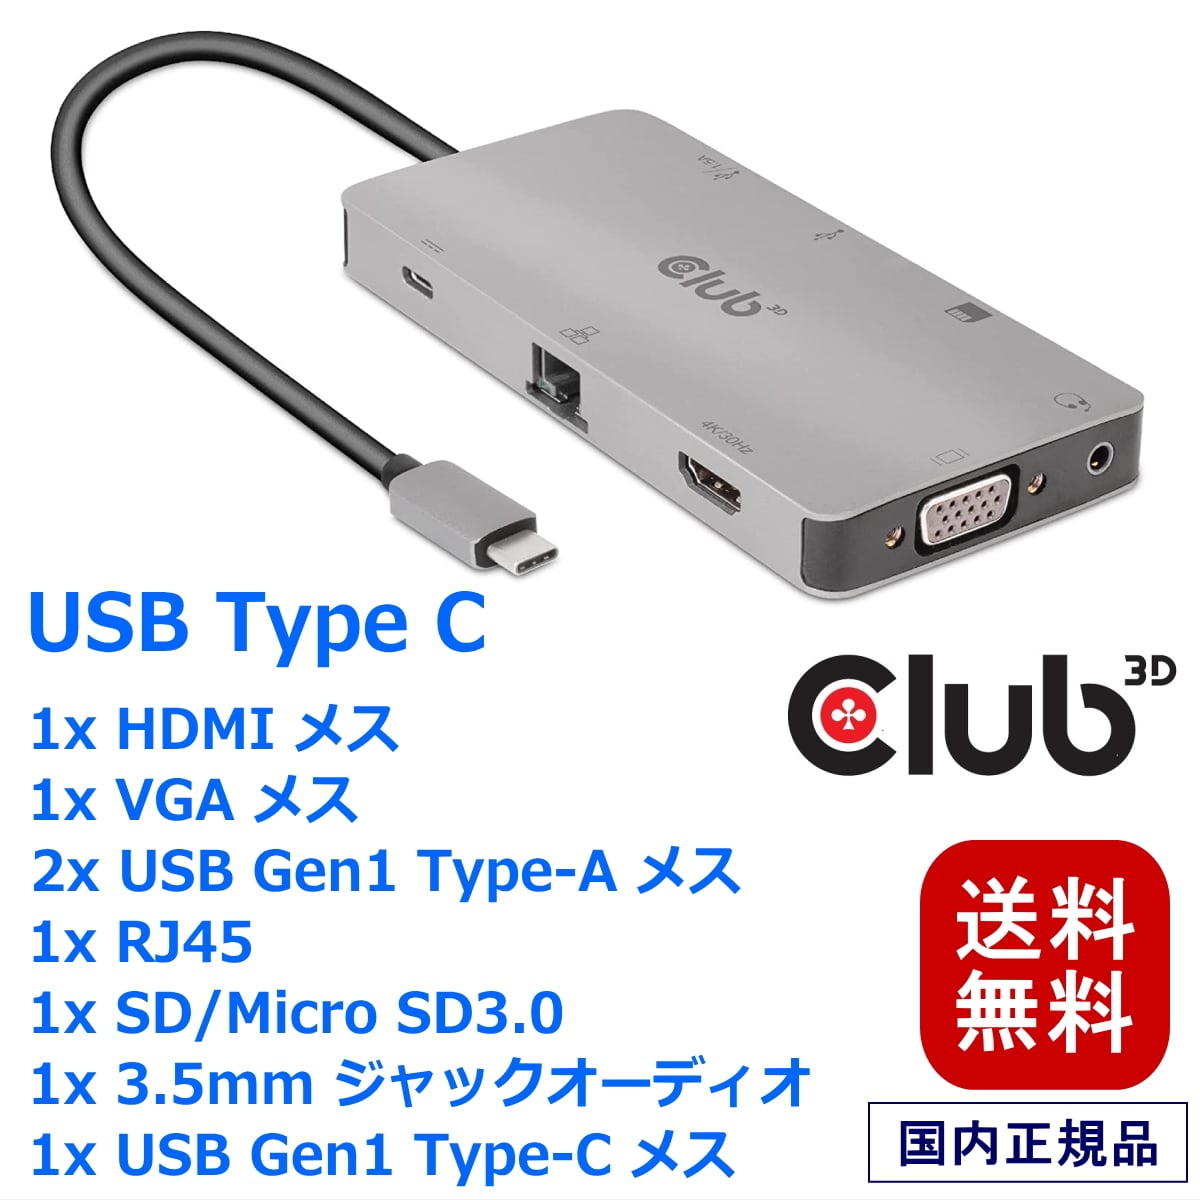 CSV-1594】Club 3D USB Type C 9-in-1 ハブ to HDMI 4K60Hz VGA 2x USB A  RJ45 SD Micro カードスロット USB C PD3.0 100W (CSV-1594) BearHouse